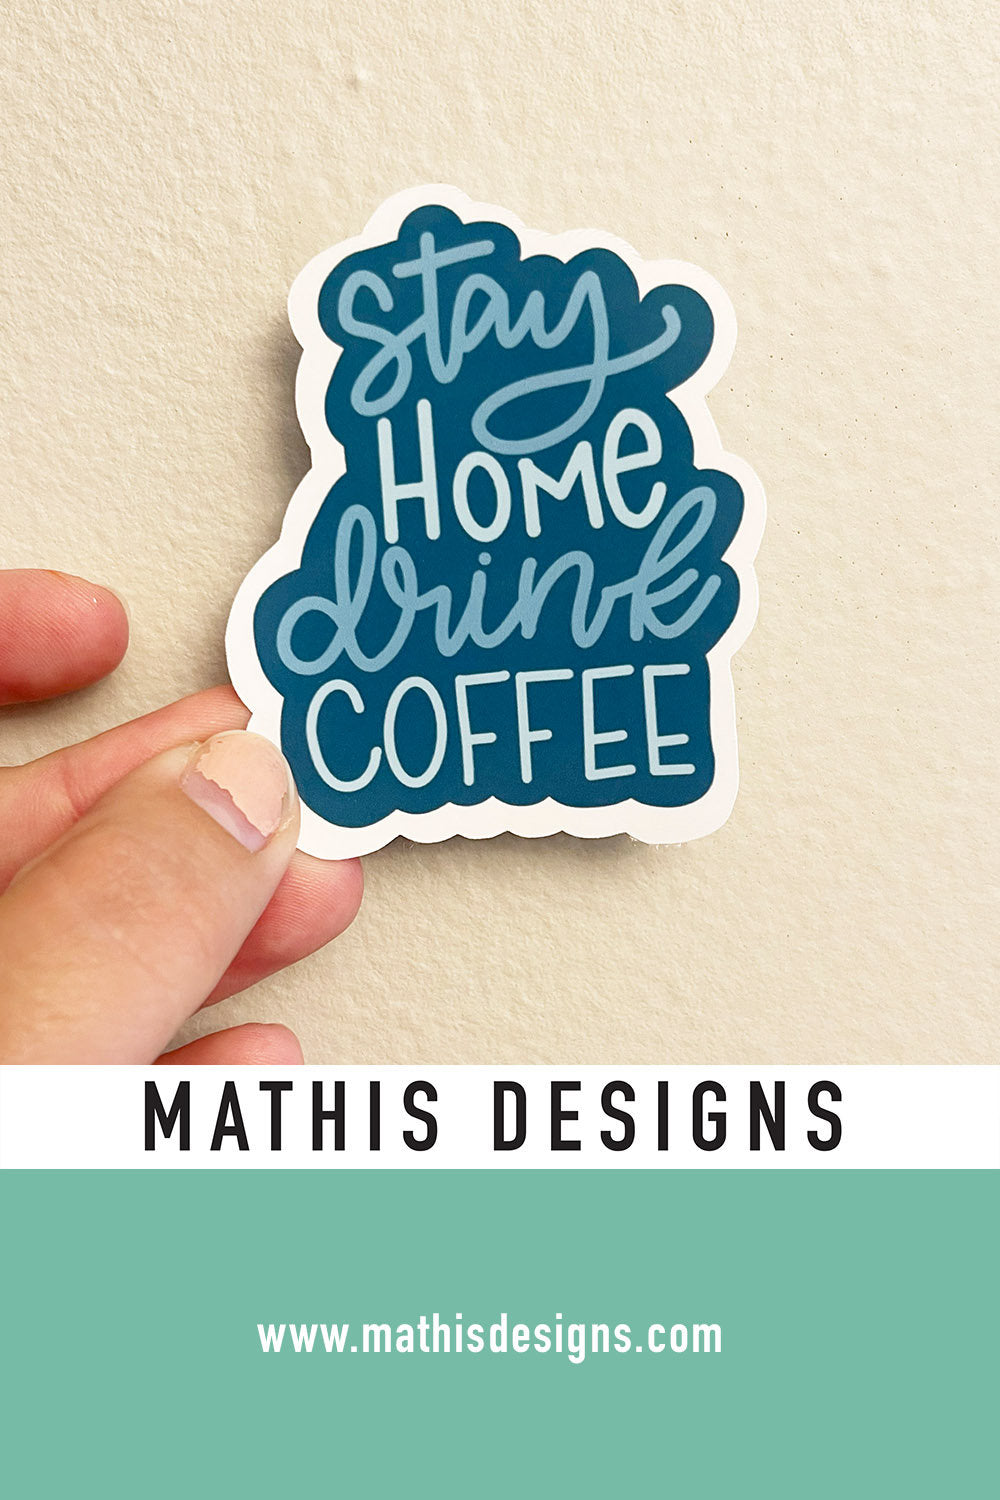 Stay Home Drink Coffee Sticker